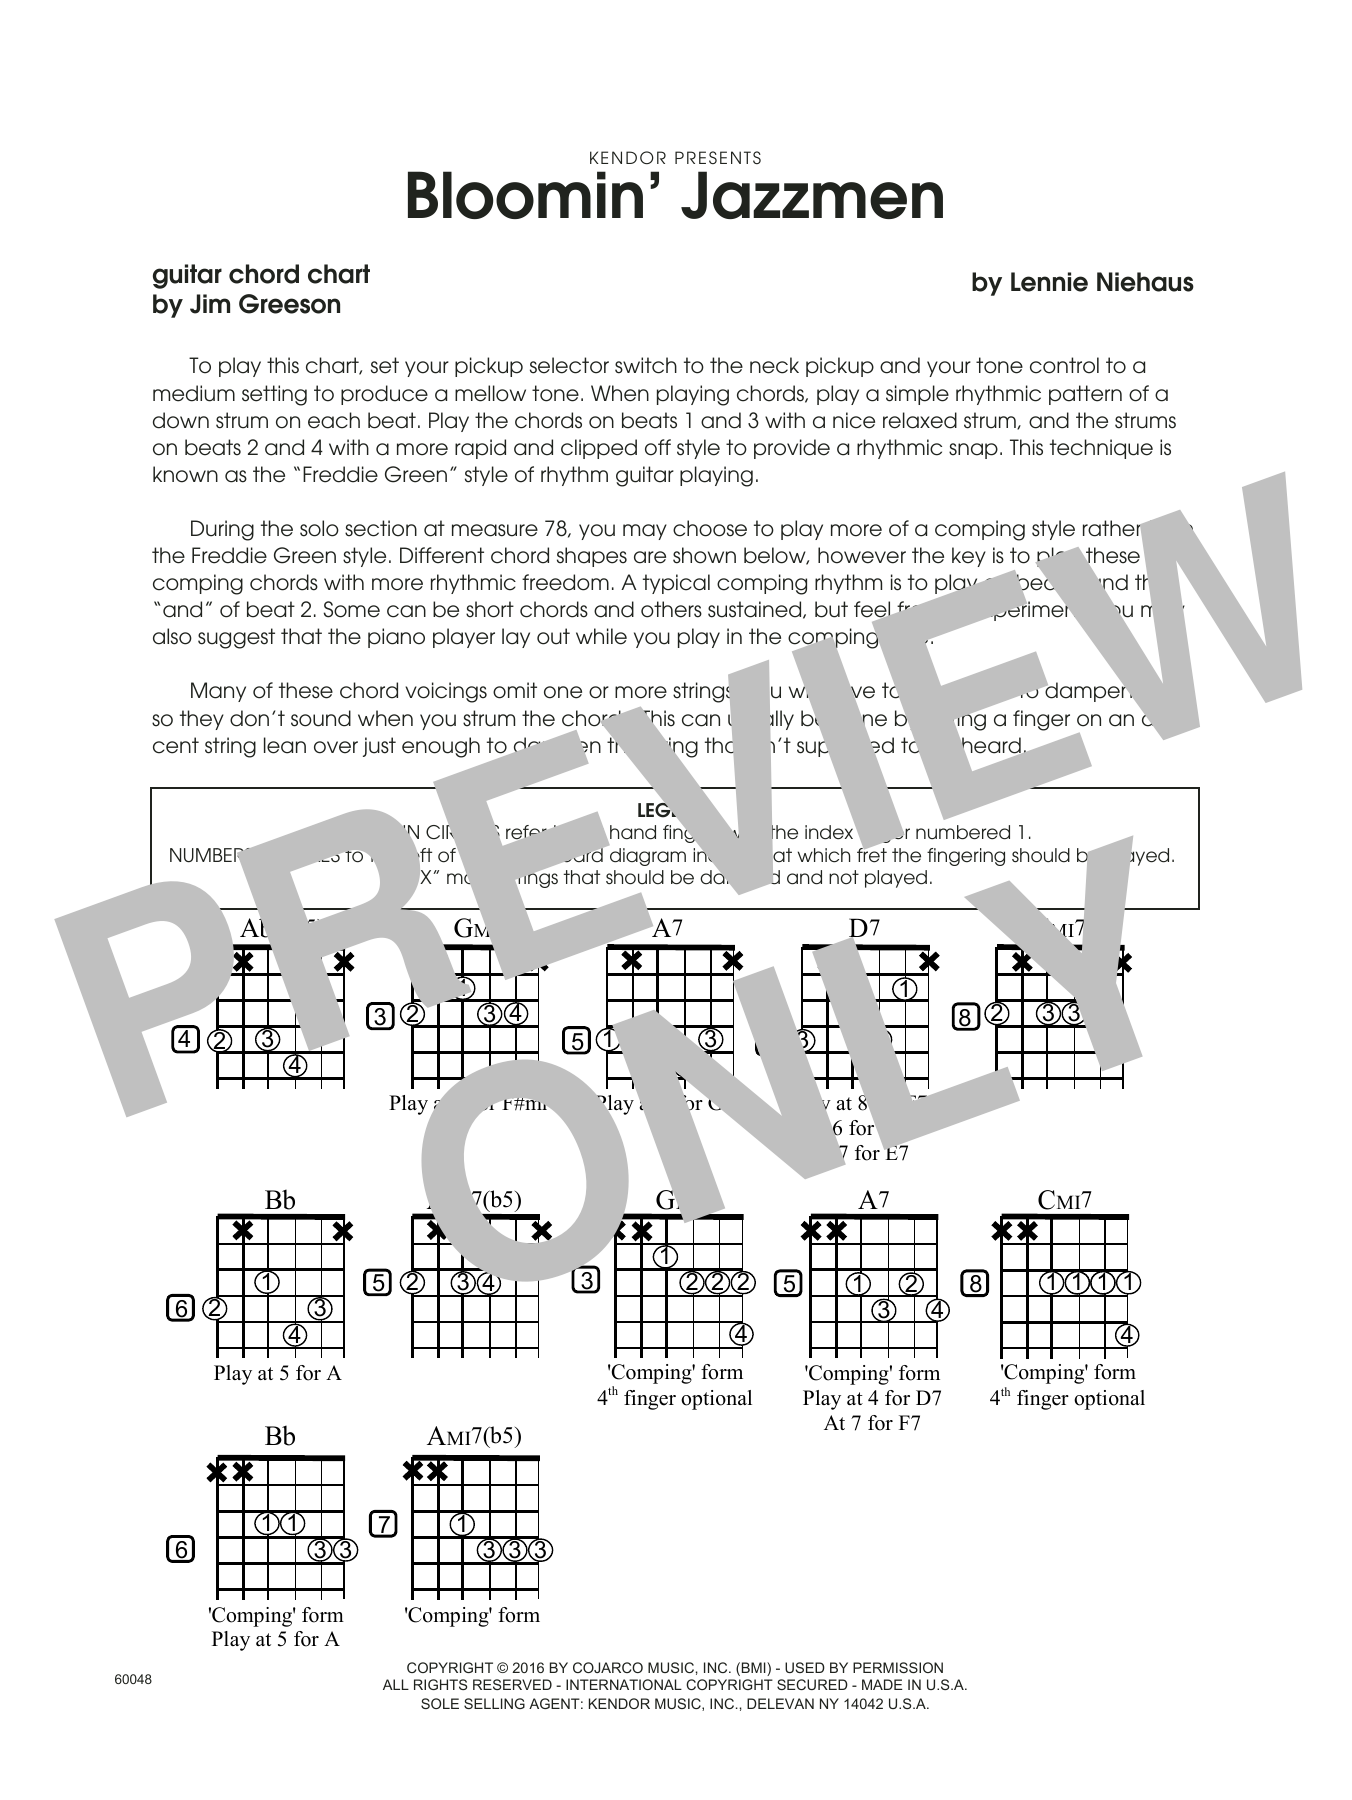 Download Lennie Niehaus Bloomin' Jazzmen - Guitar Chord Chart Sheet Music